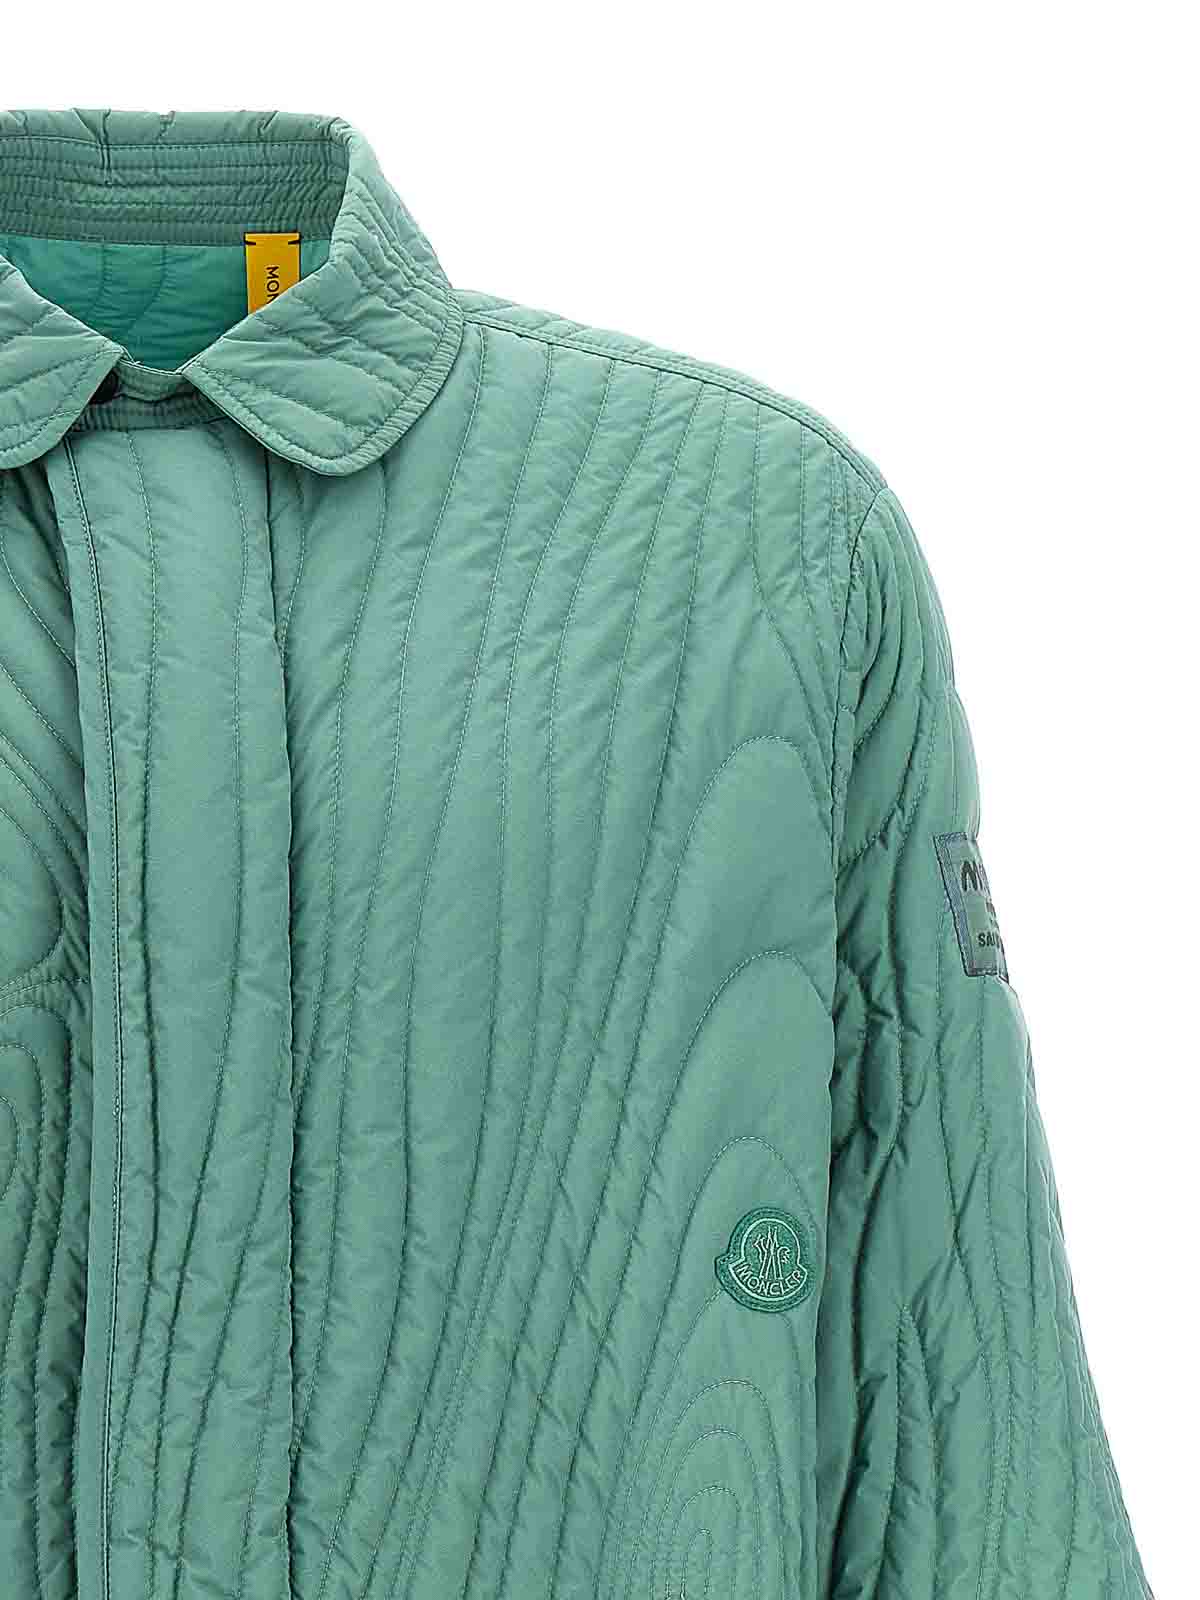 Shop Moncler Genius X Salehe Bembury  Jacket In Light Blue